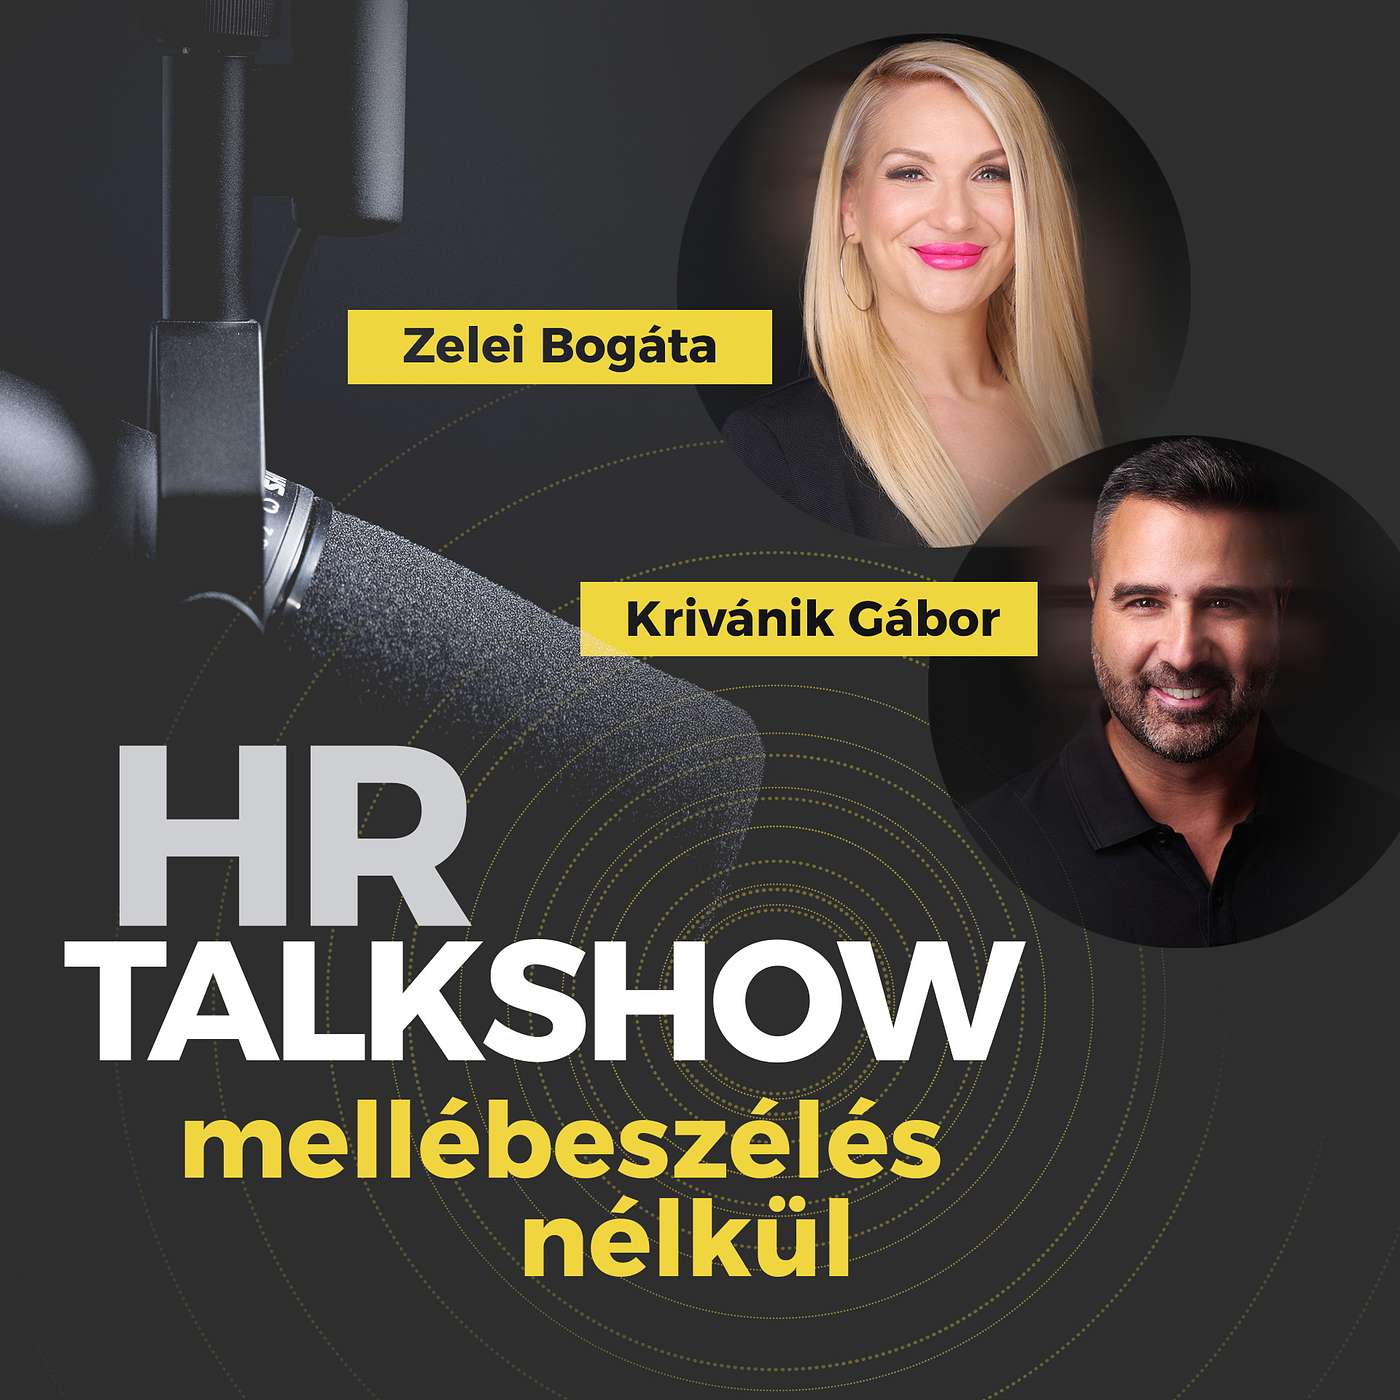 HR Talkshow